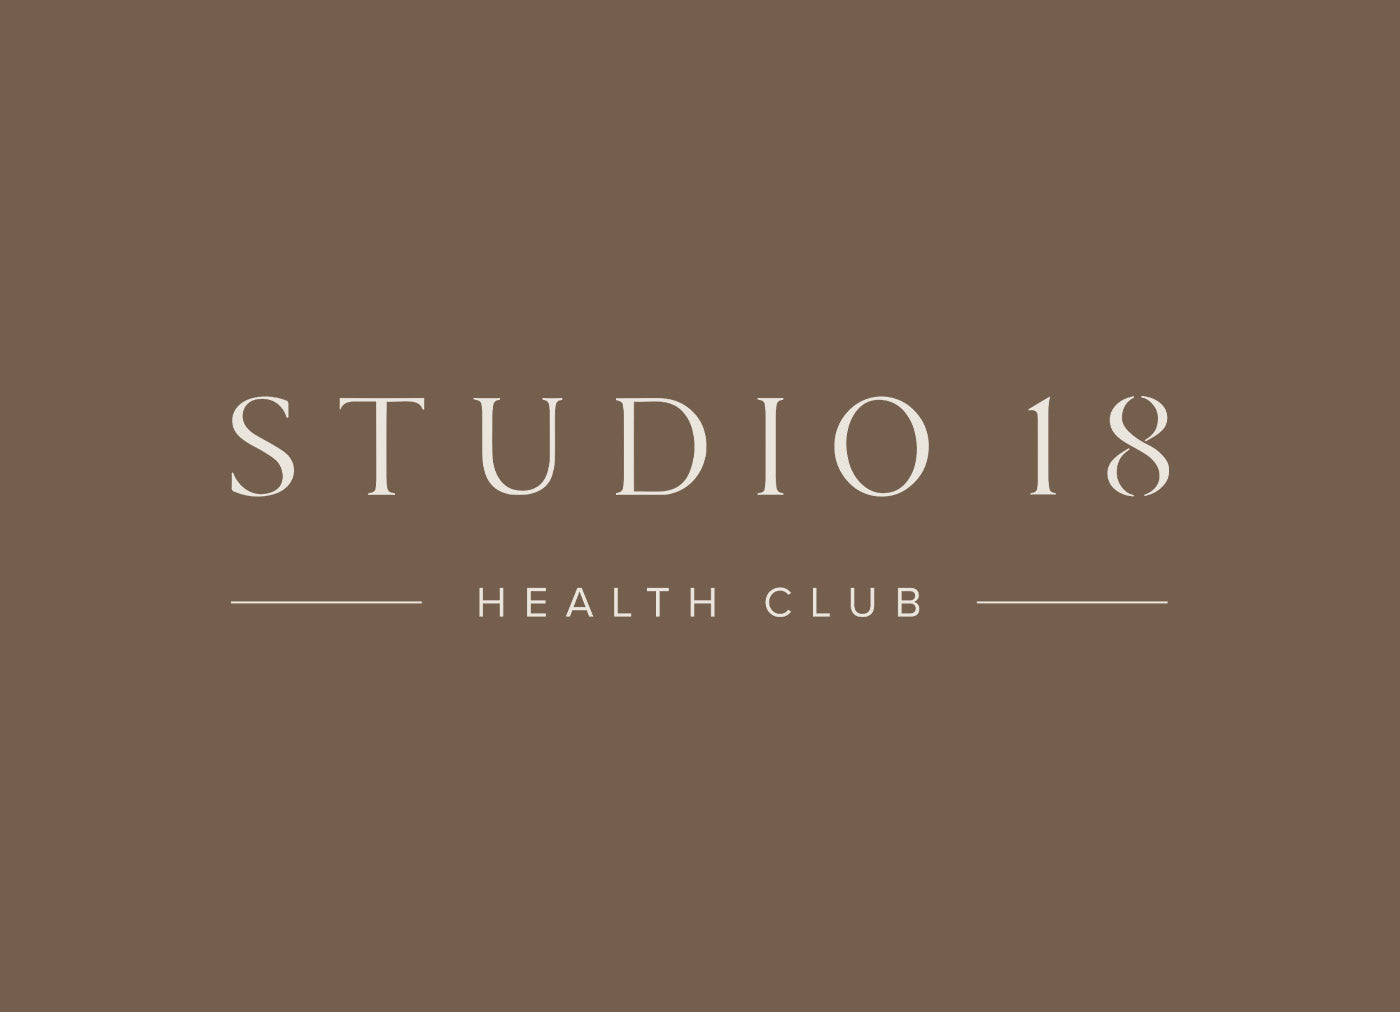 Studio 18 Health Club